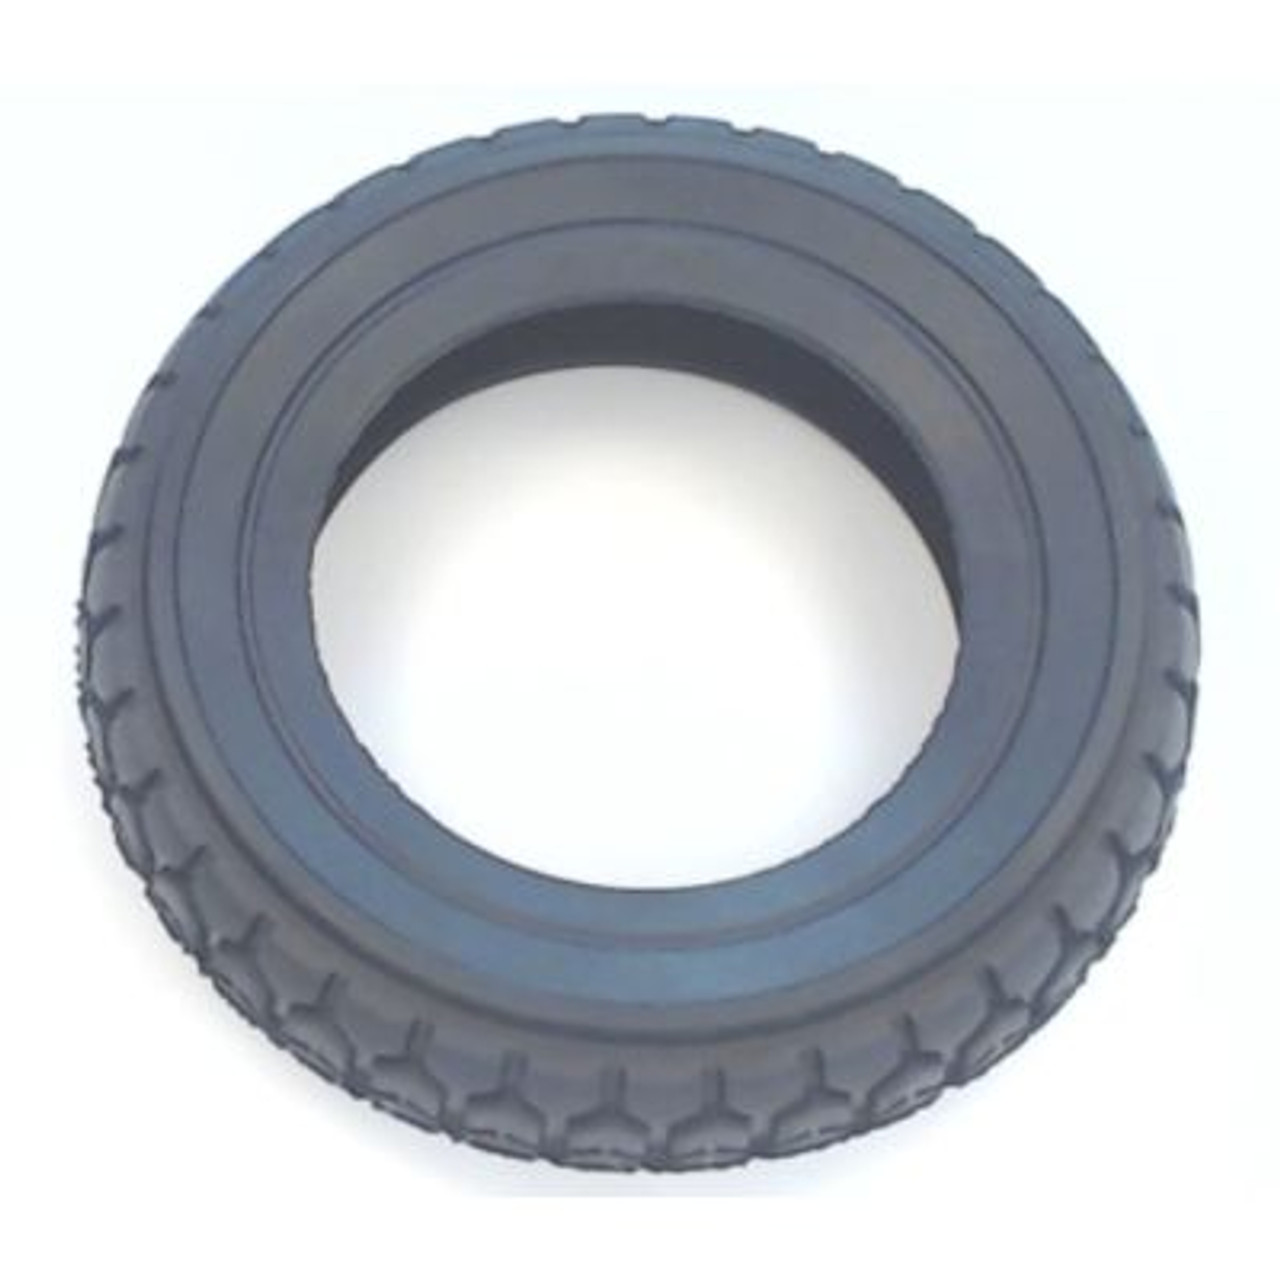 Mclane Edger Tire 7", 70617, 7061-7